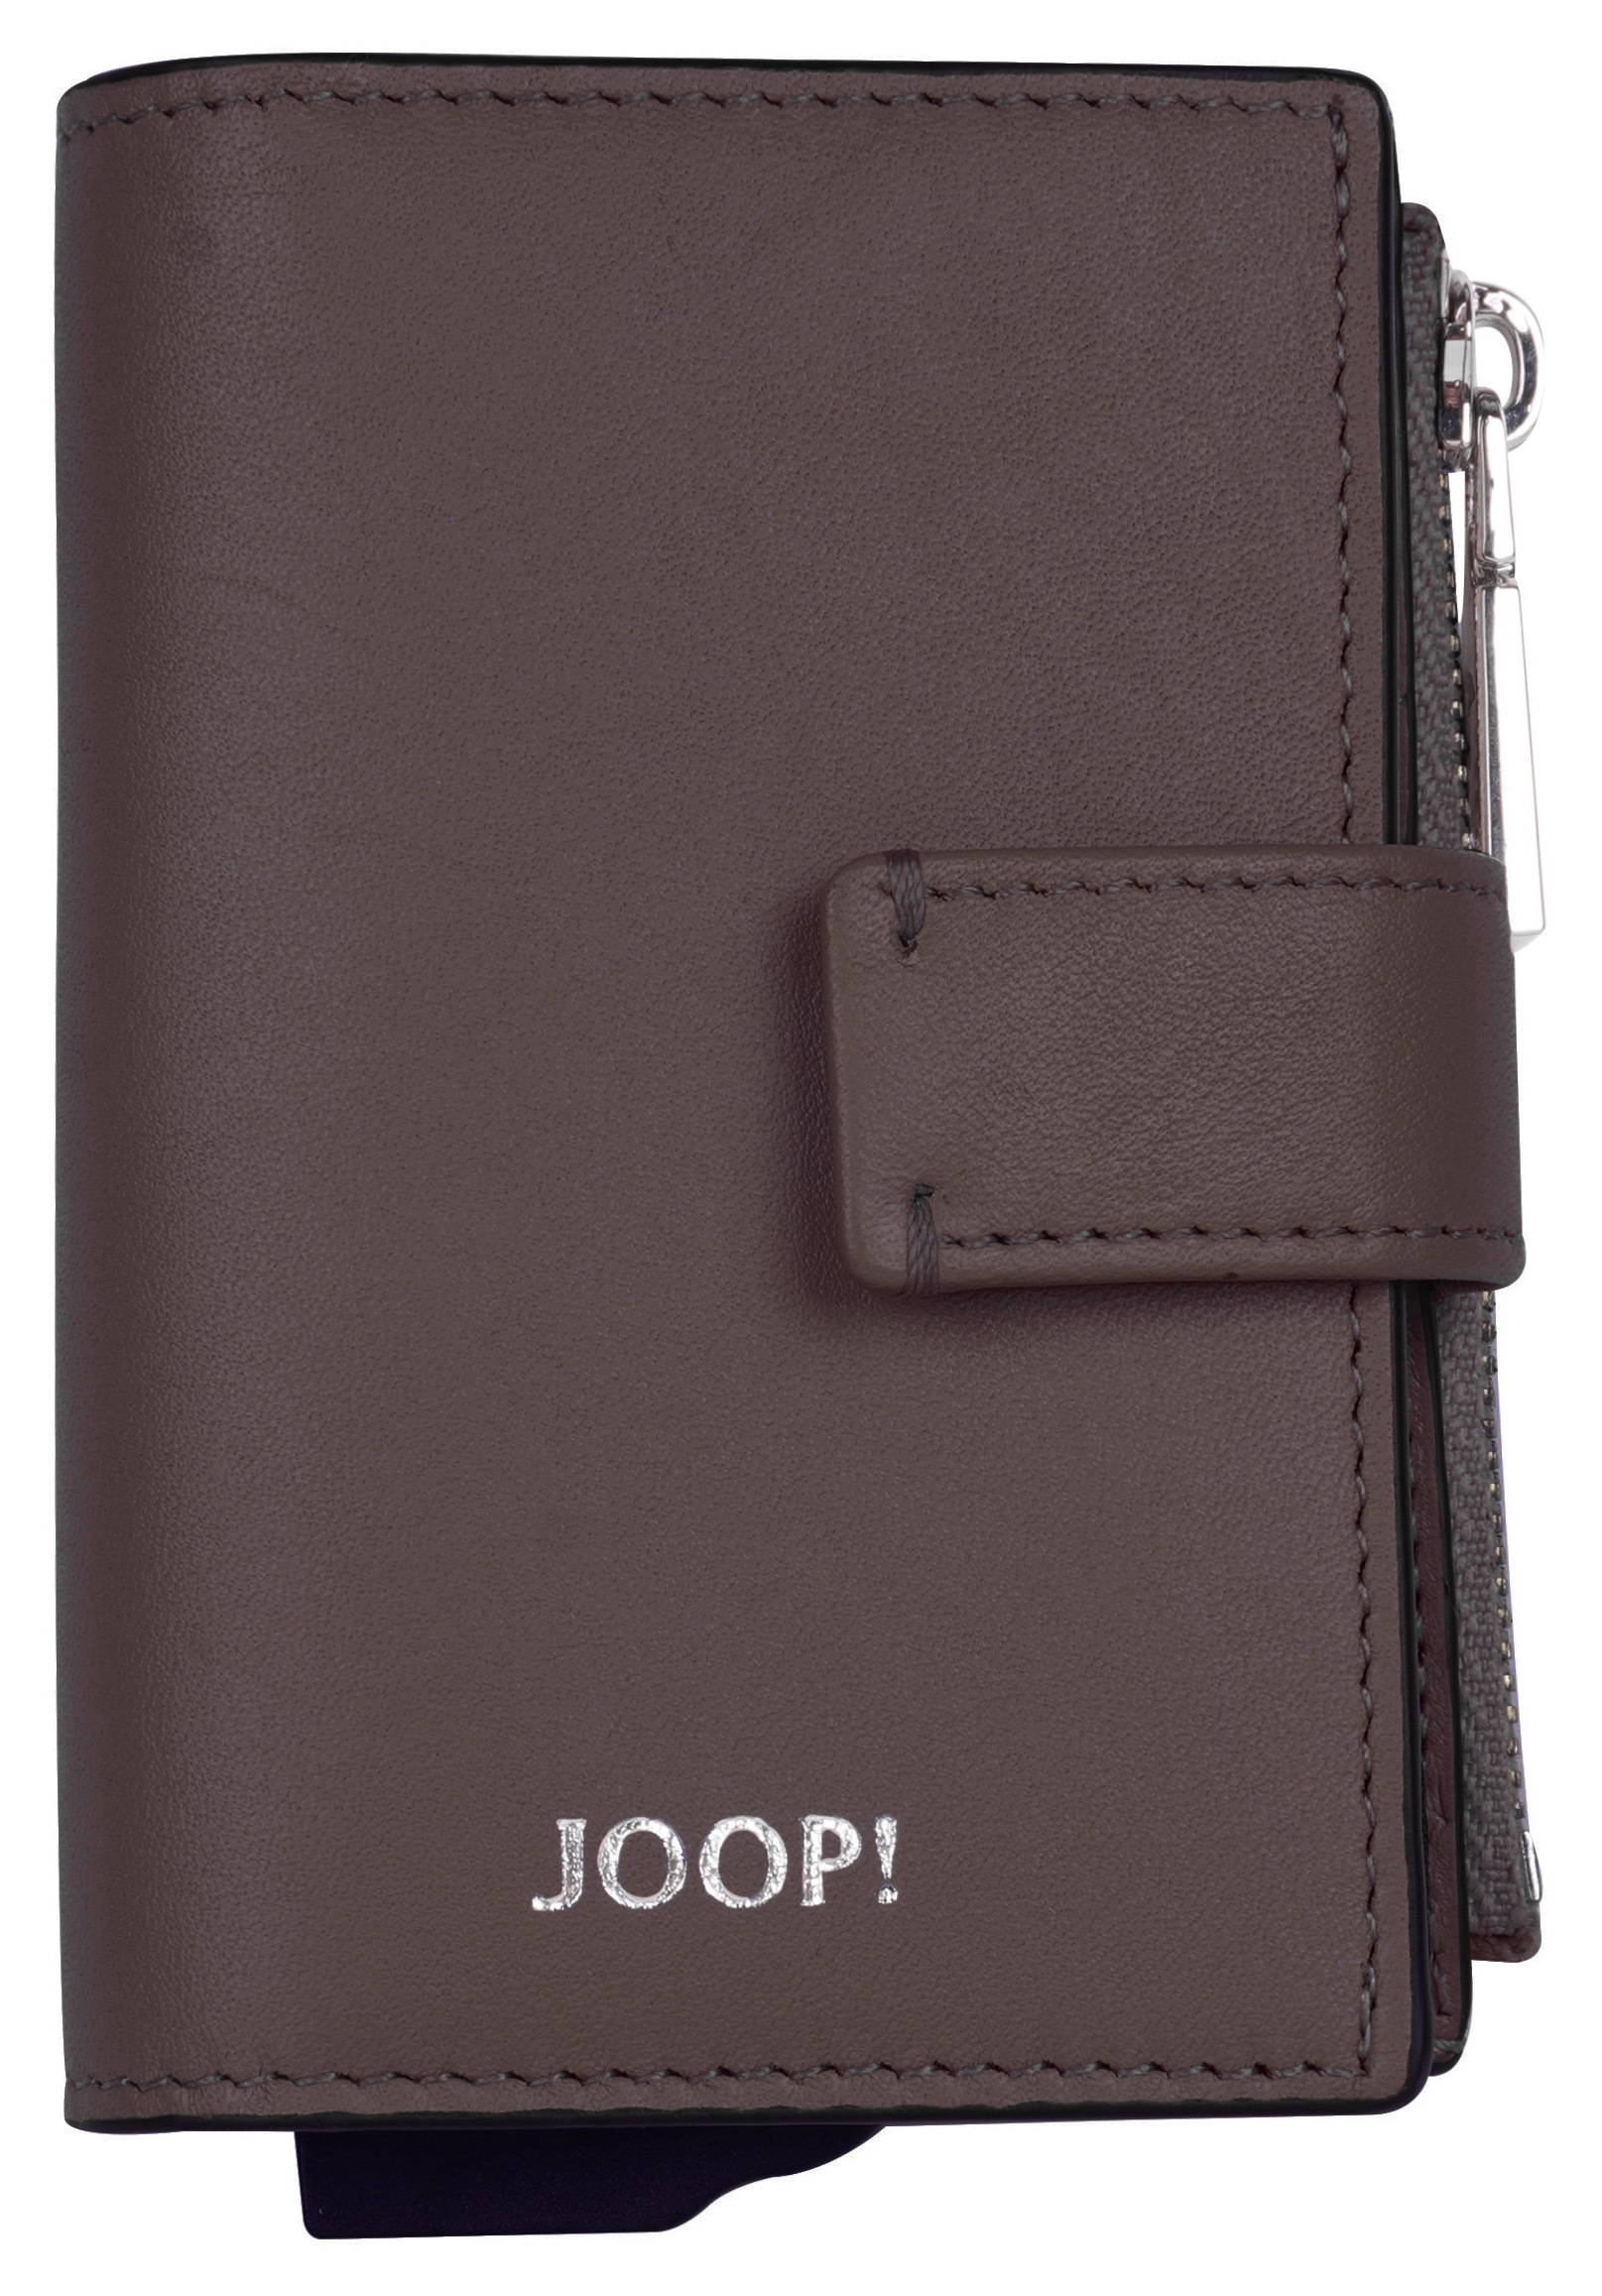 JOOP! Kartenetui »sofisticato 1.0 c-four e-cage sv8«, Geldbörse Portemonnaie Damenbörse Ledergeldbörse